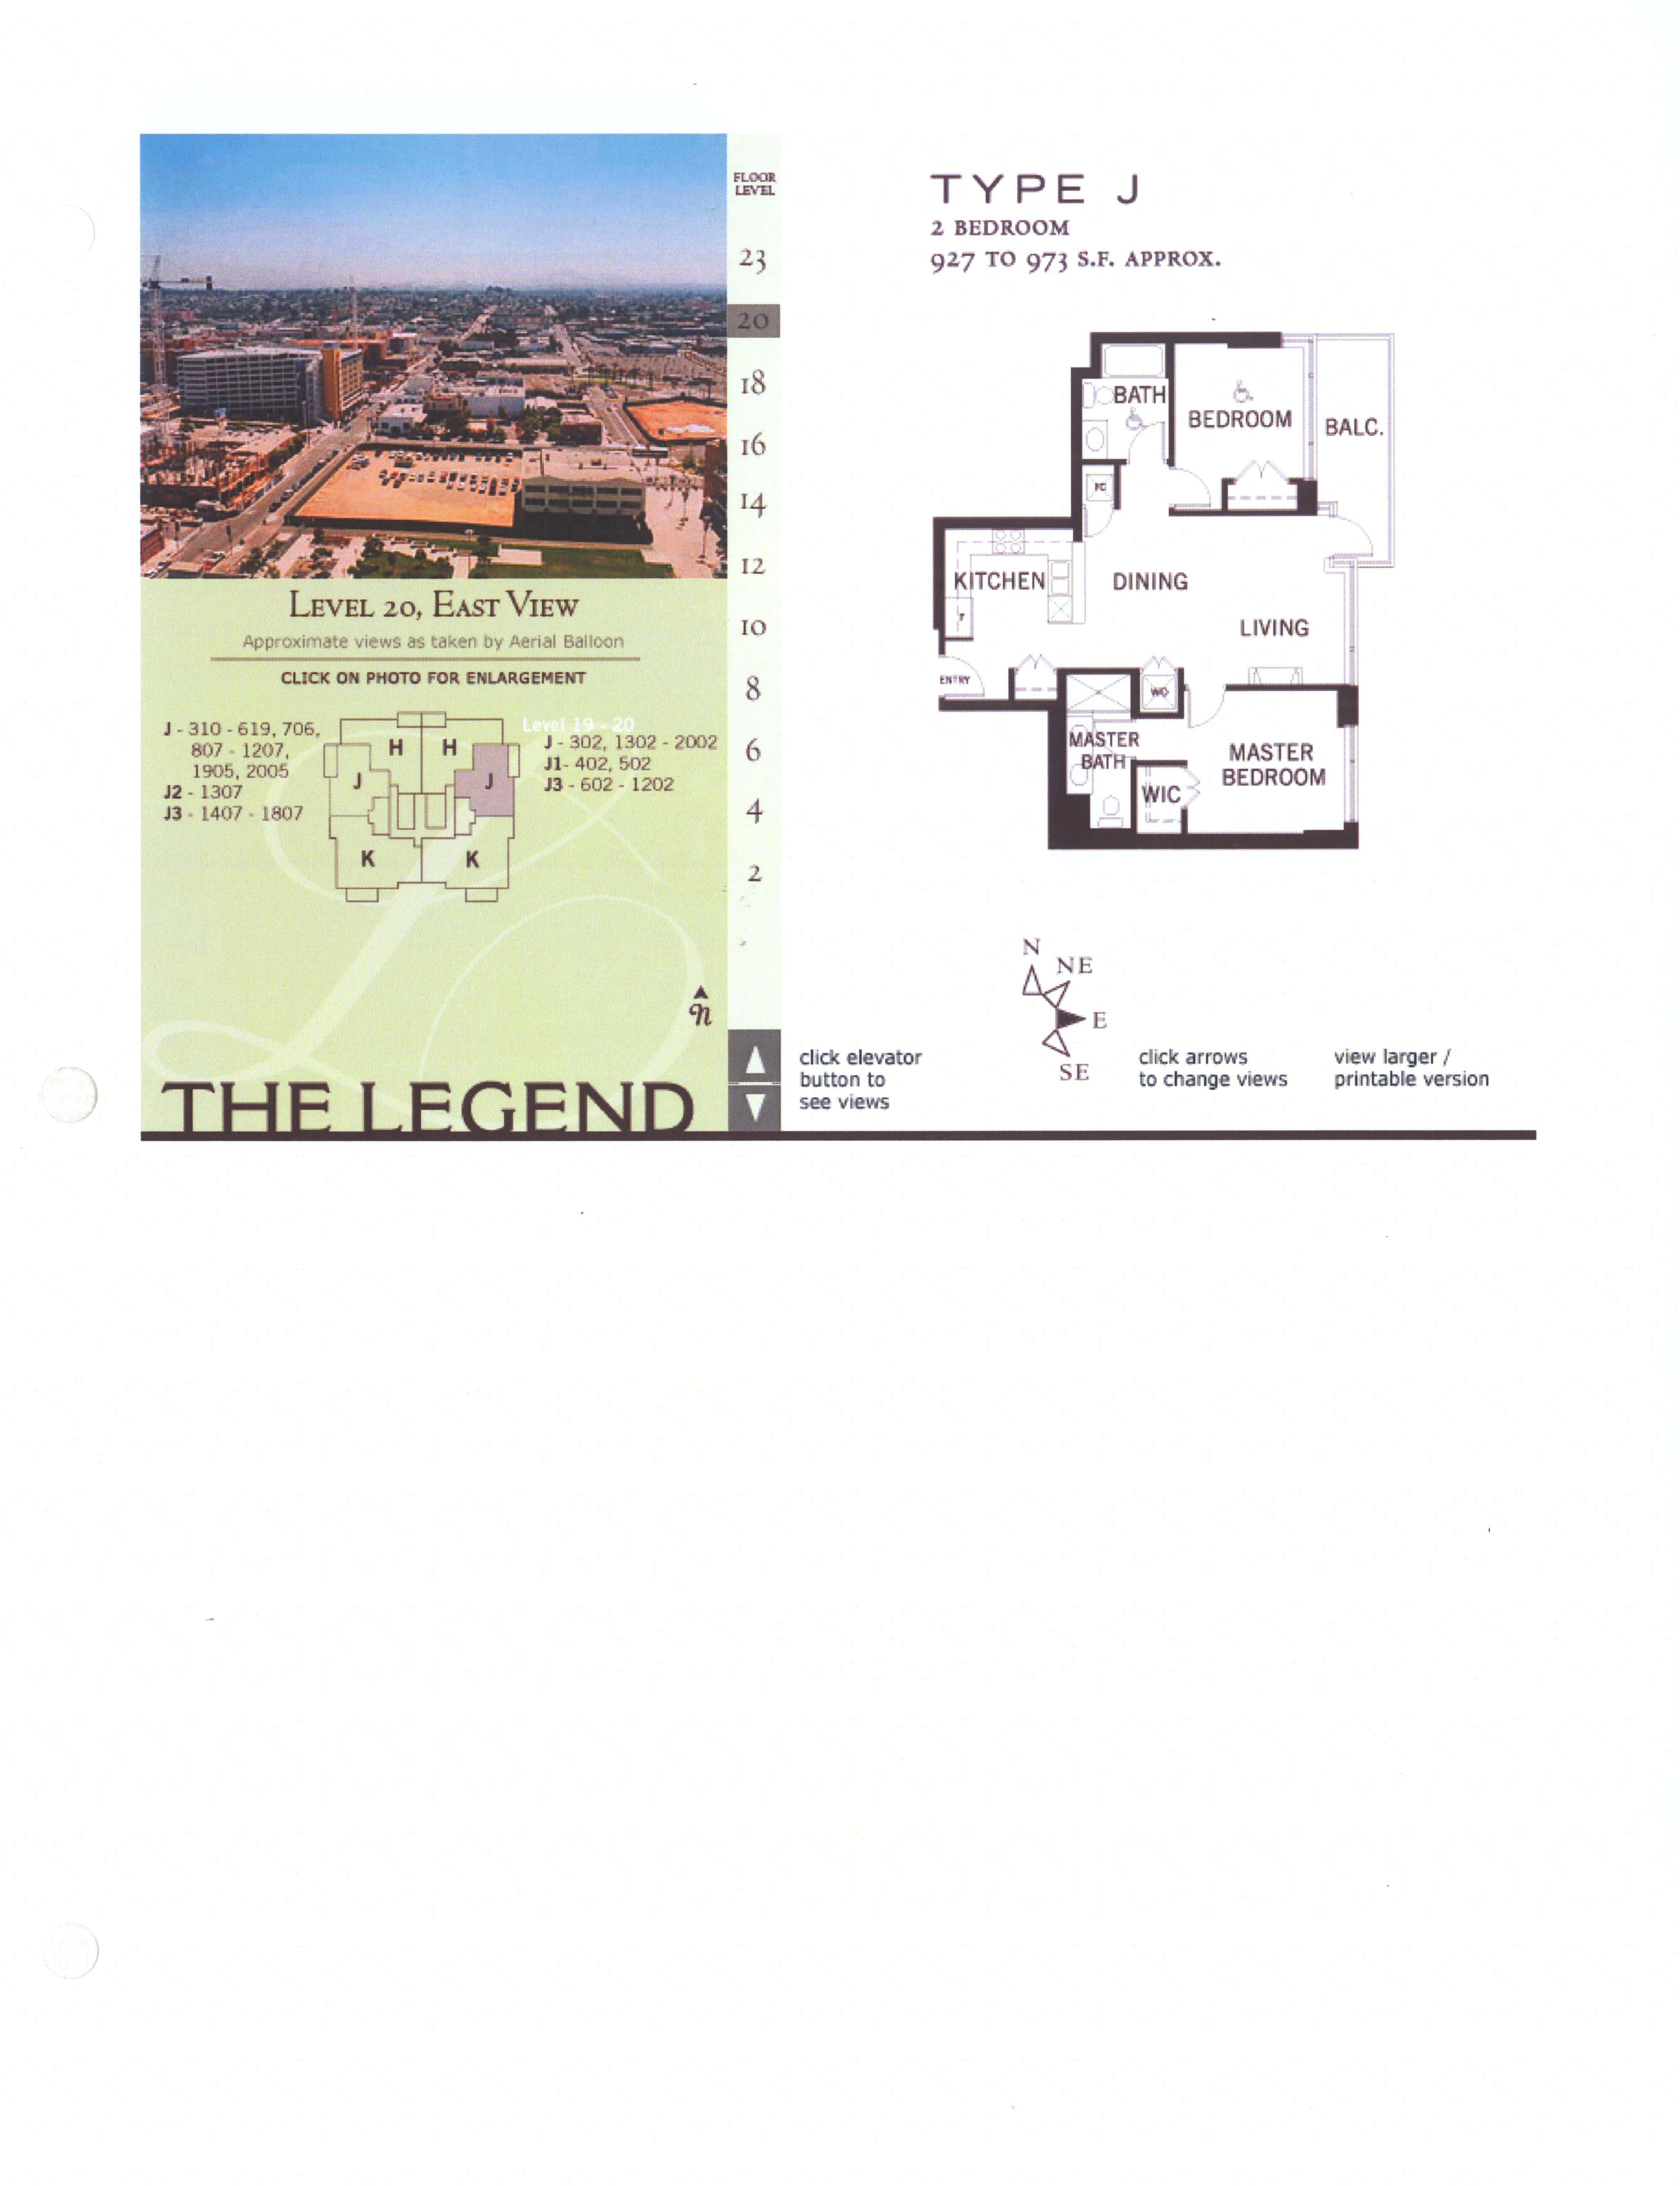 The Legend Floor Plan Level 20, East View – Type J